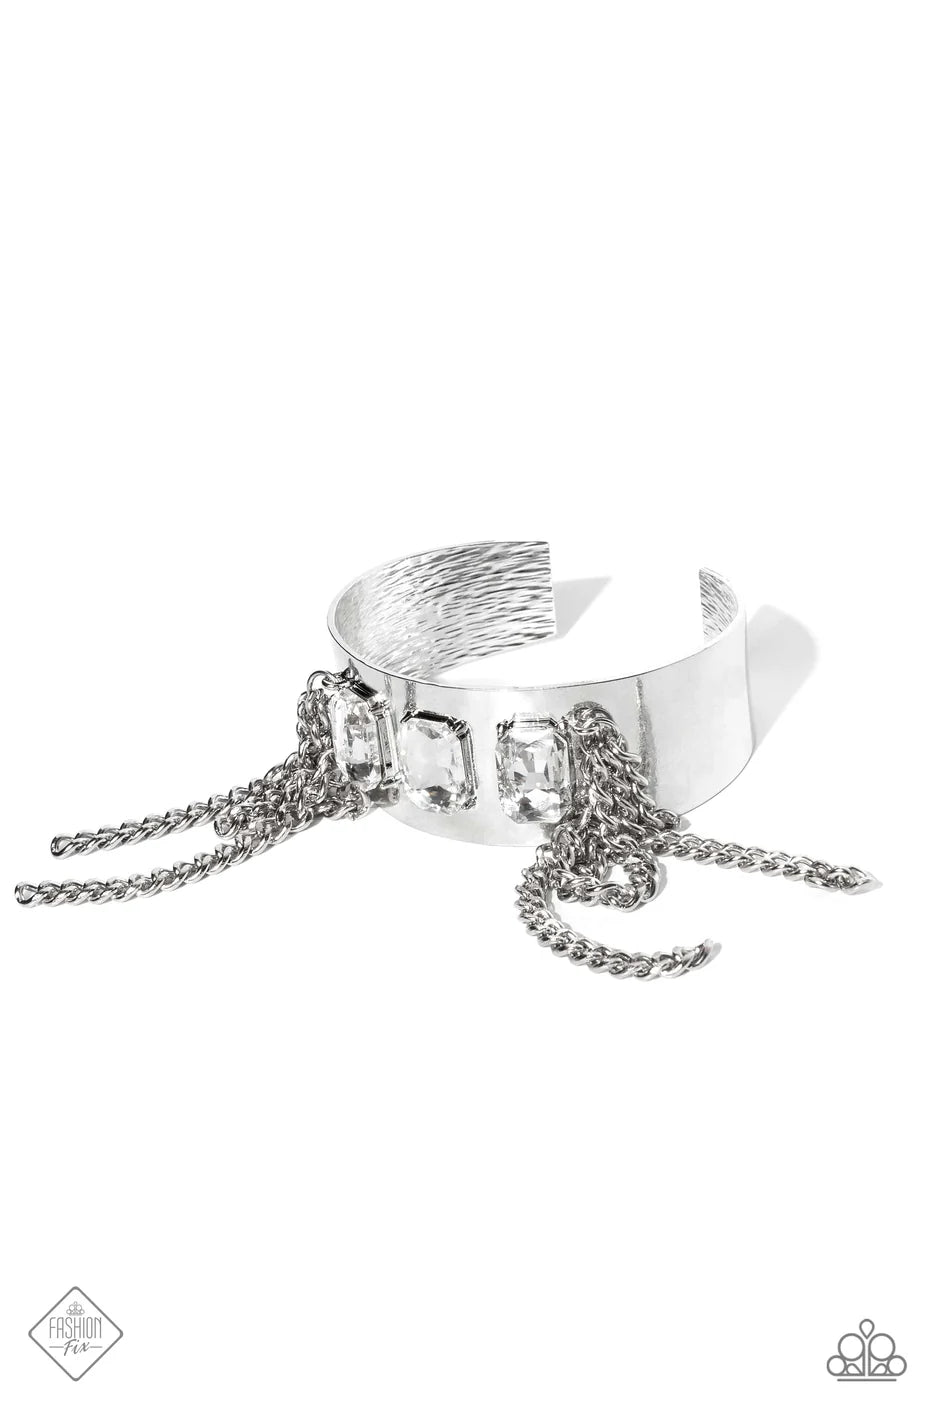 CHAIN Showers - White Emerald-Cut Gems) Bracelet (MM-0323)